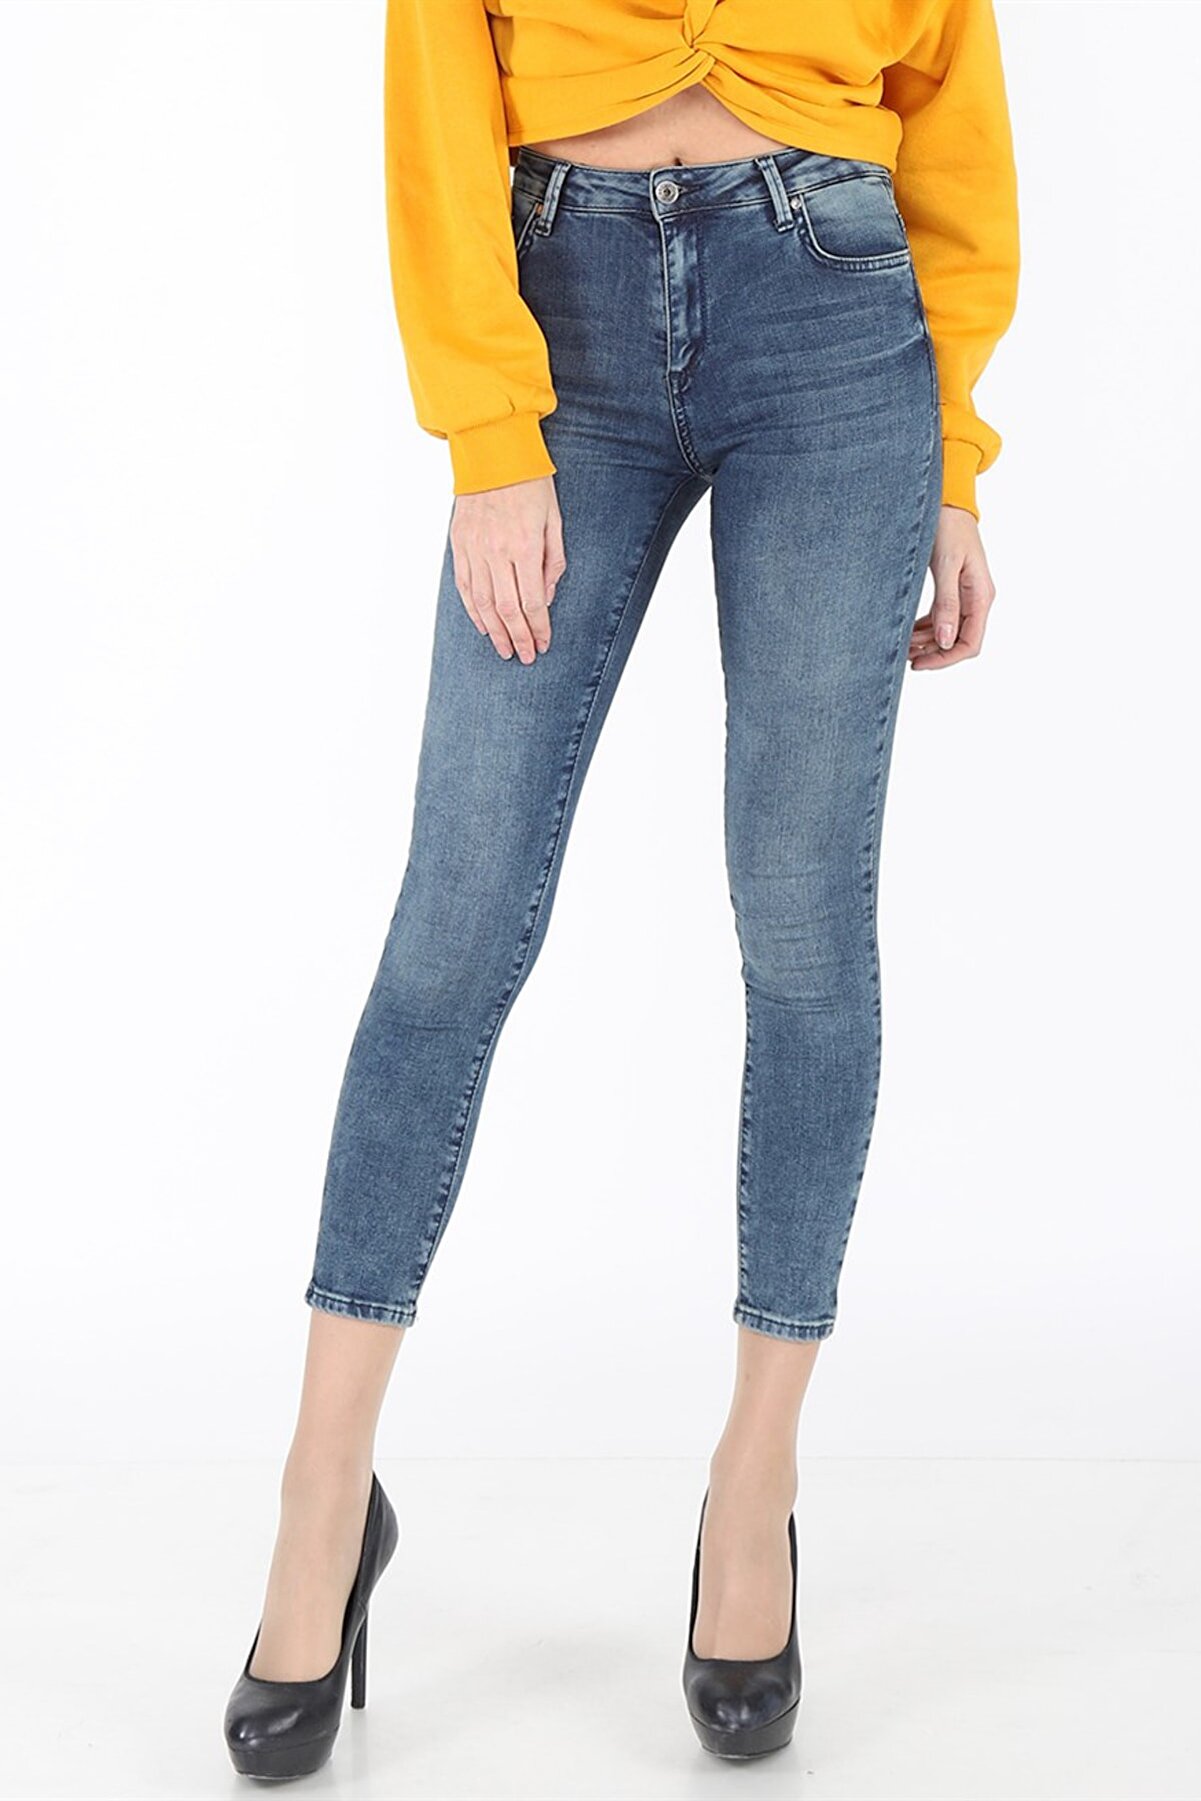 Twister Jeans Jeans Eva 9028-44 44 - 19Wb01000098-Ç1